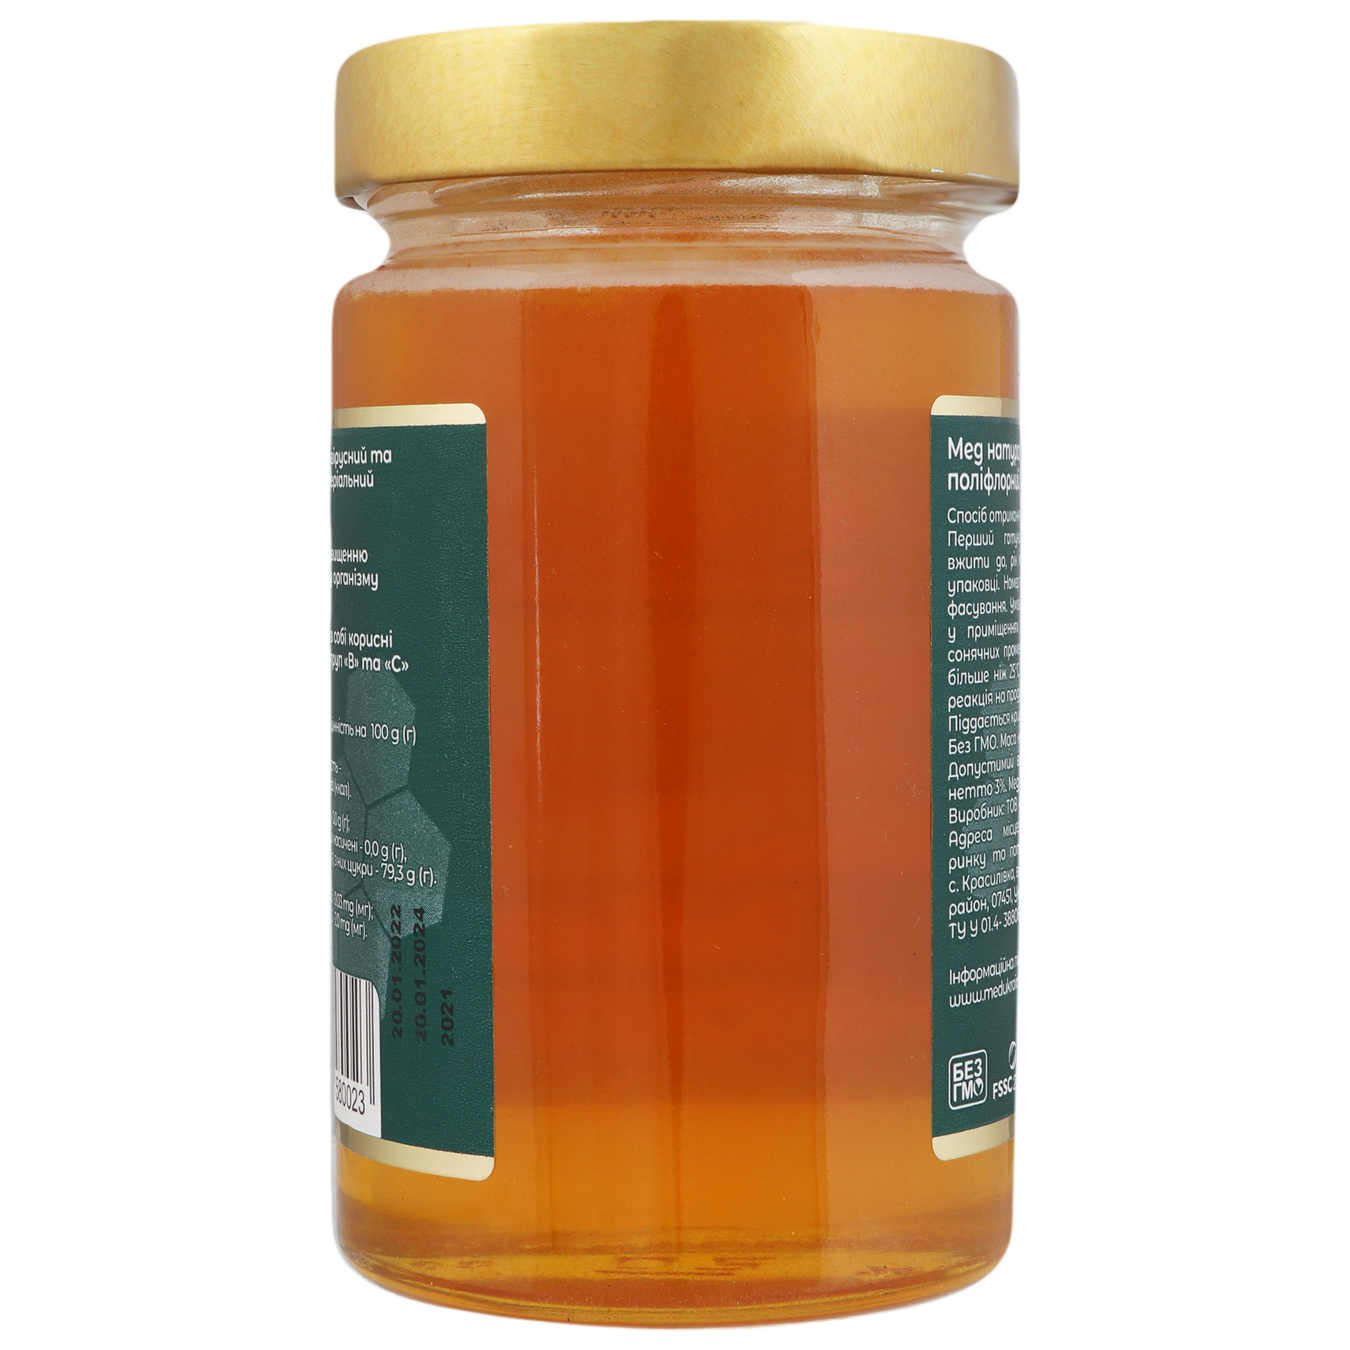 Apiary natural multi-herb honey Apiary glass jar 400g 4